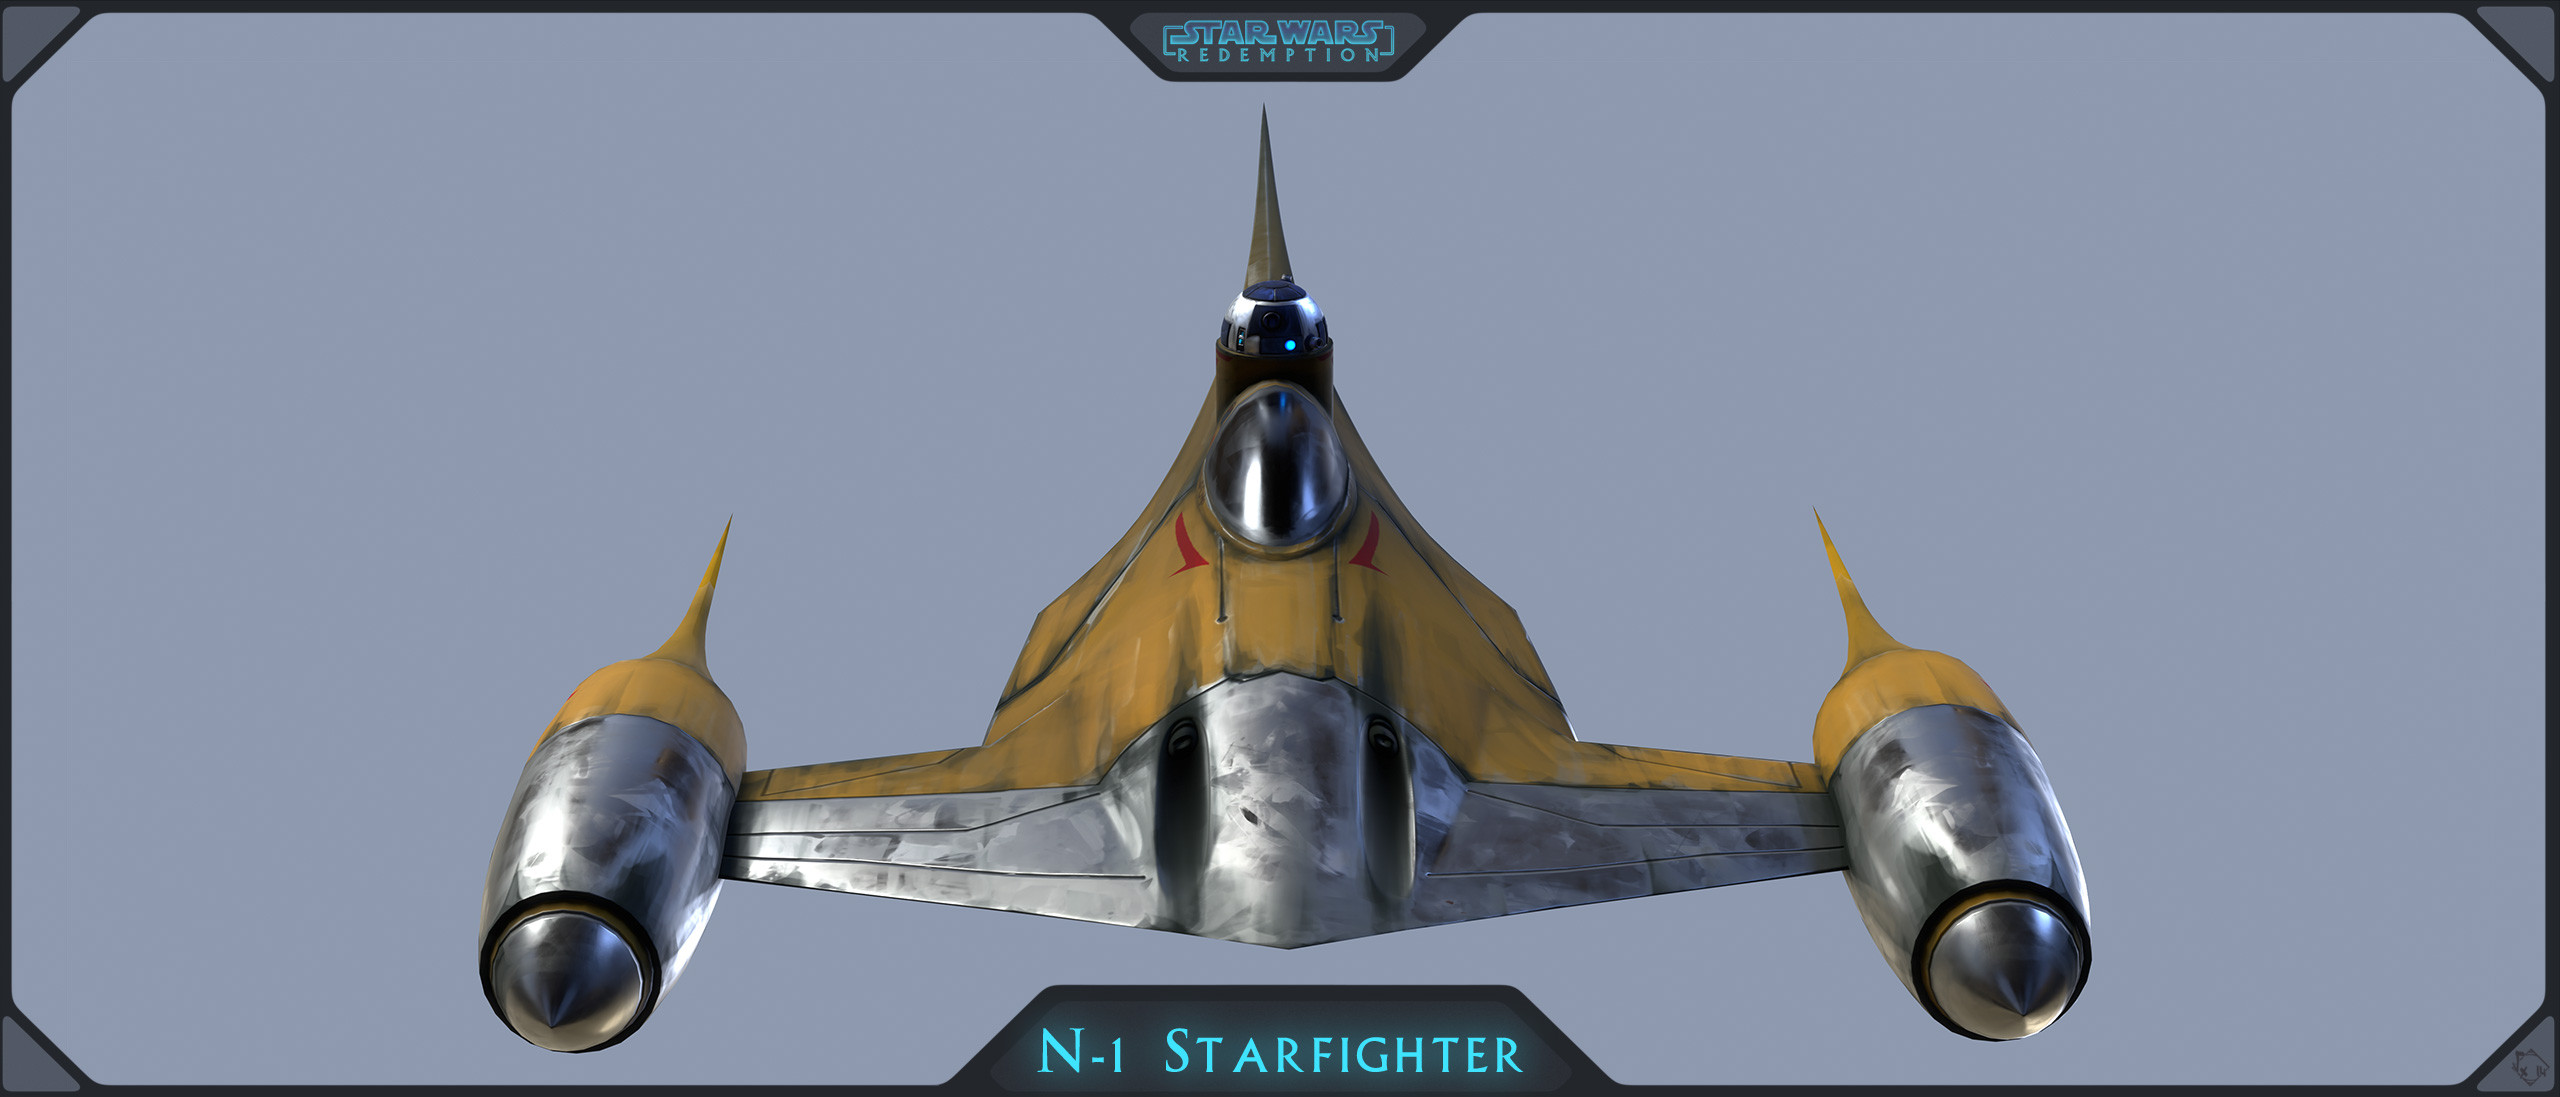 etienne-beschet-rd-prp-starfighter-n-1-1